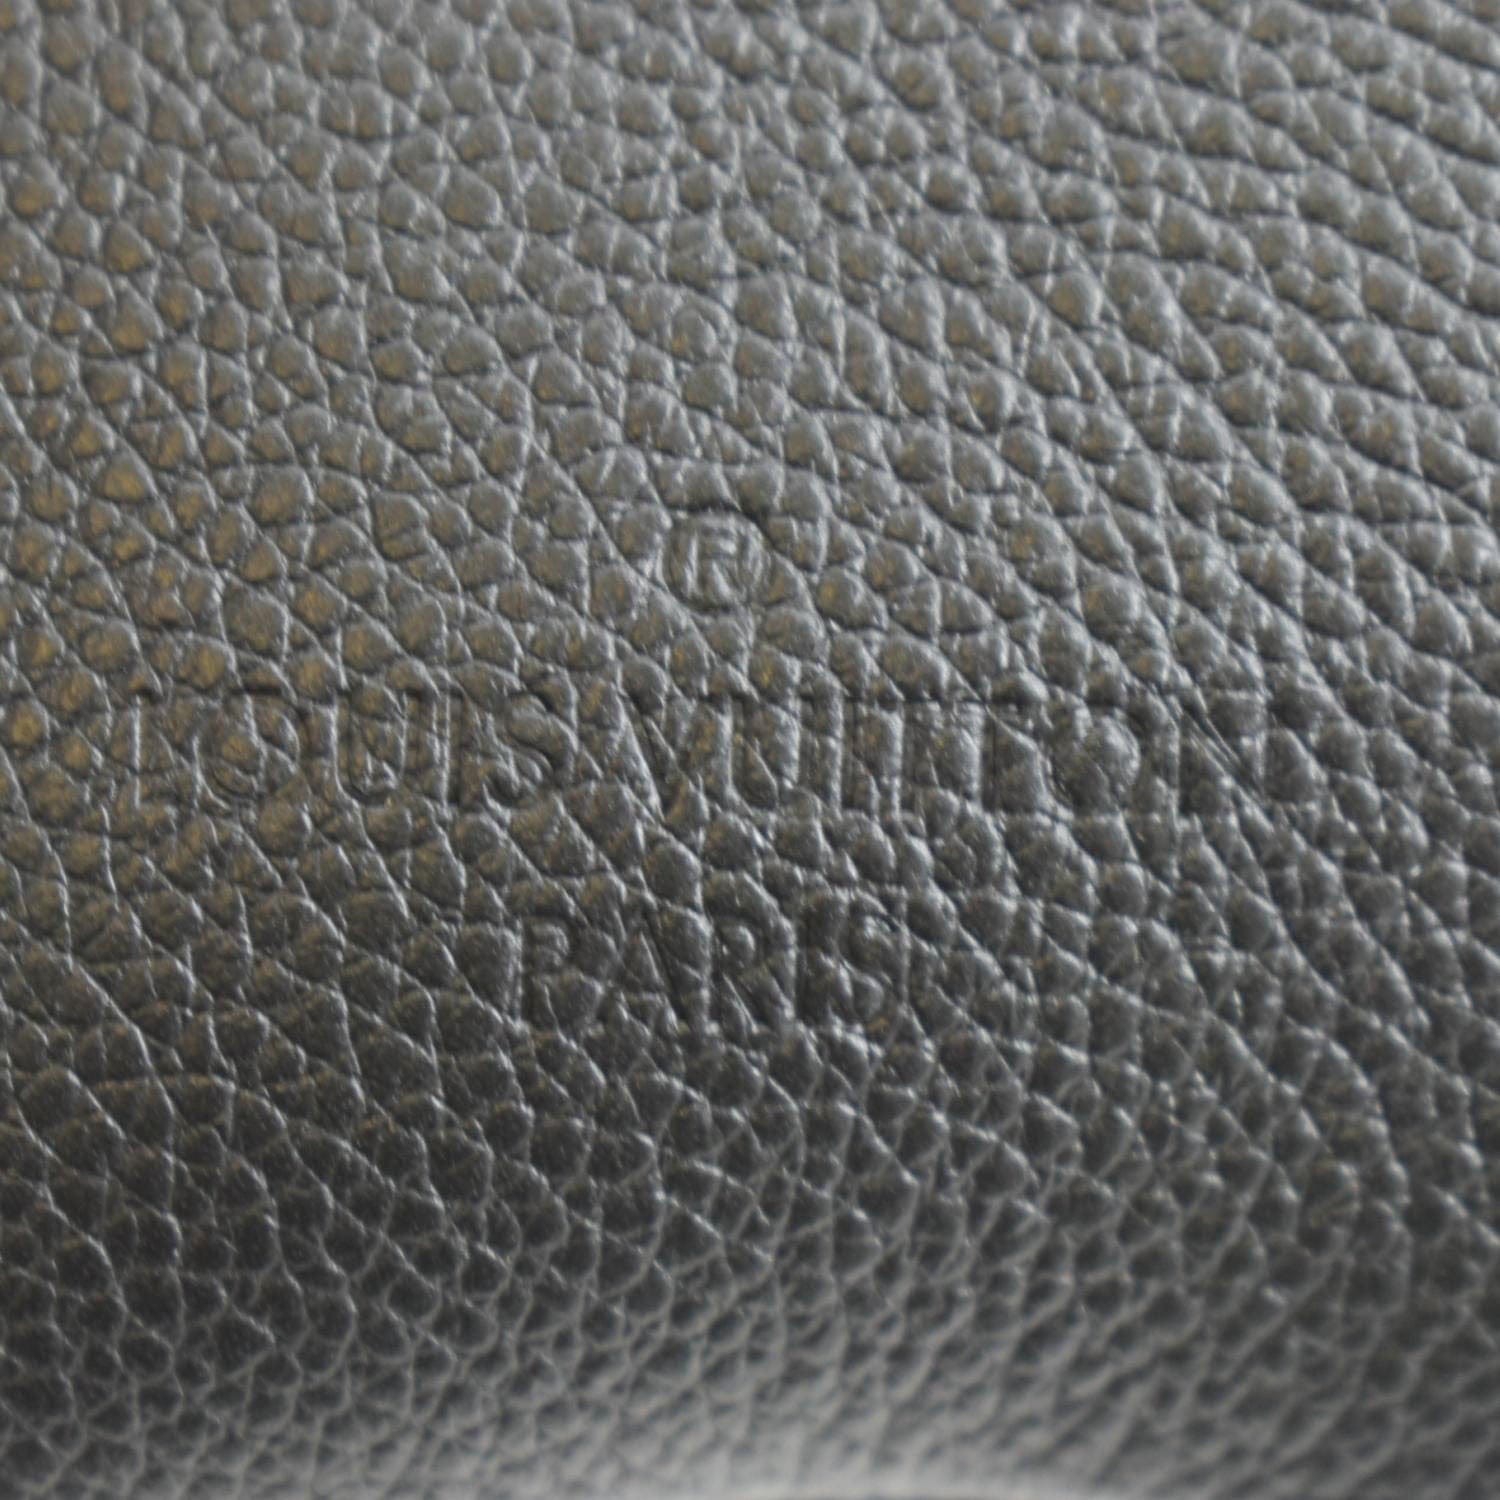 vuitton leather texture